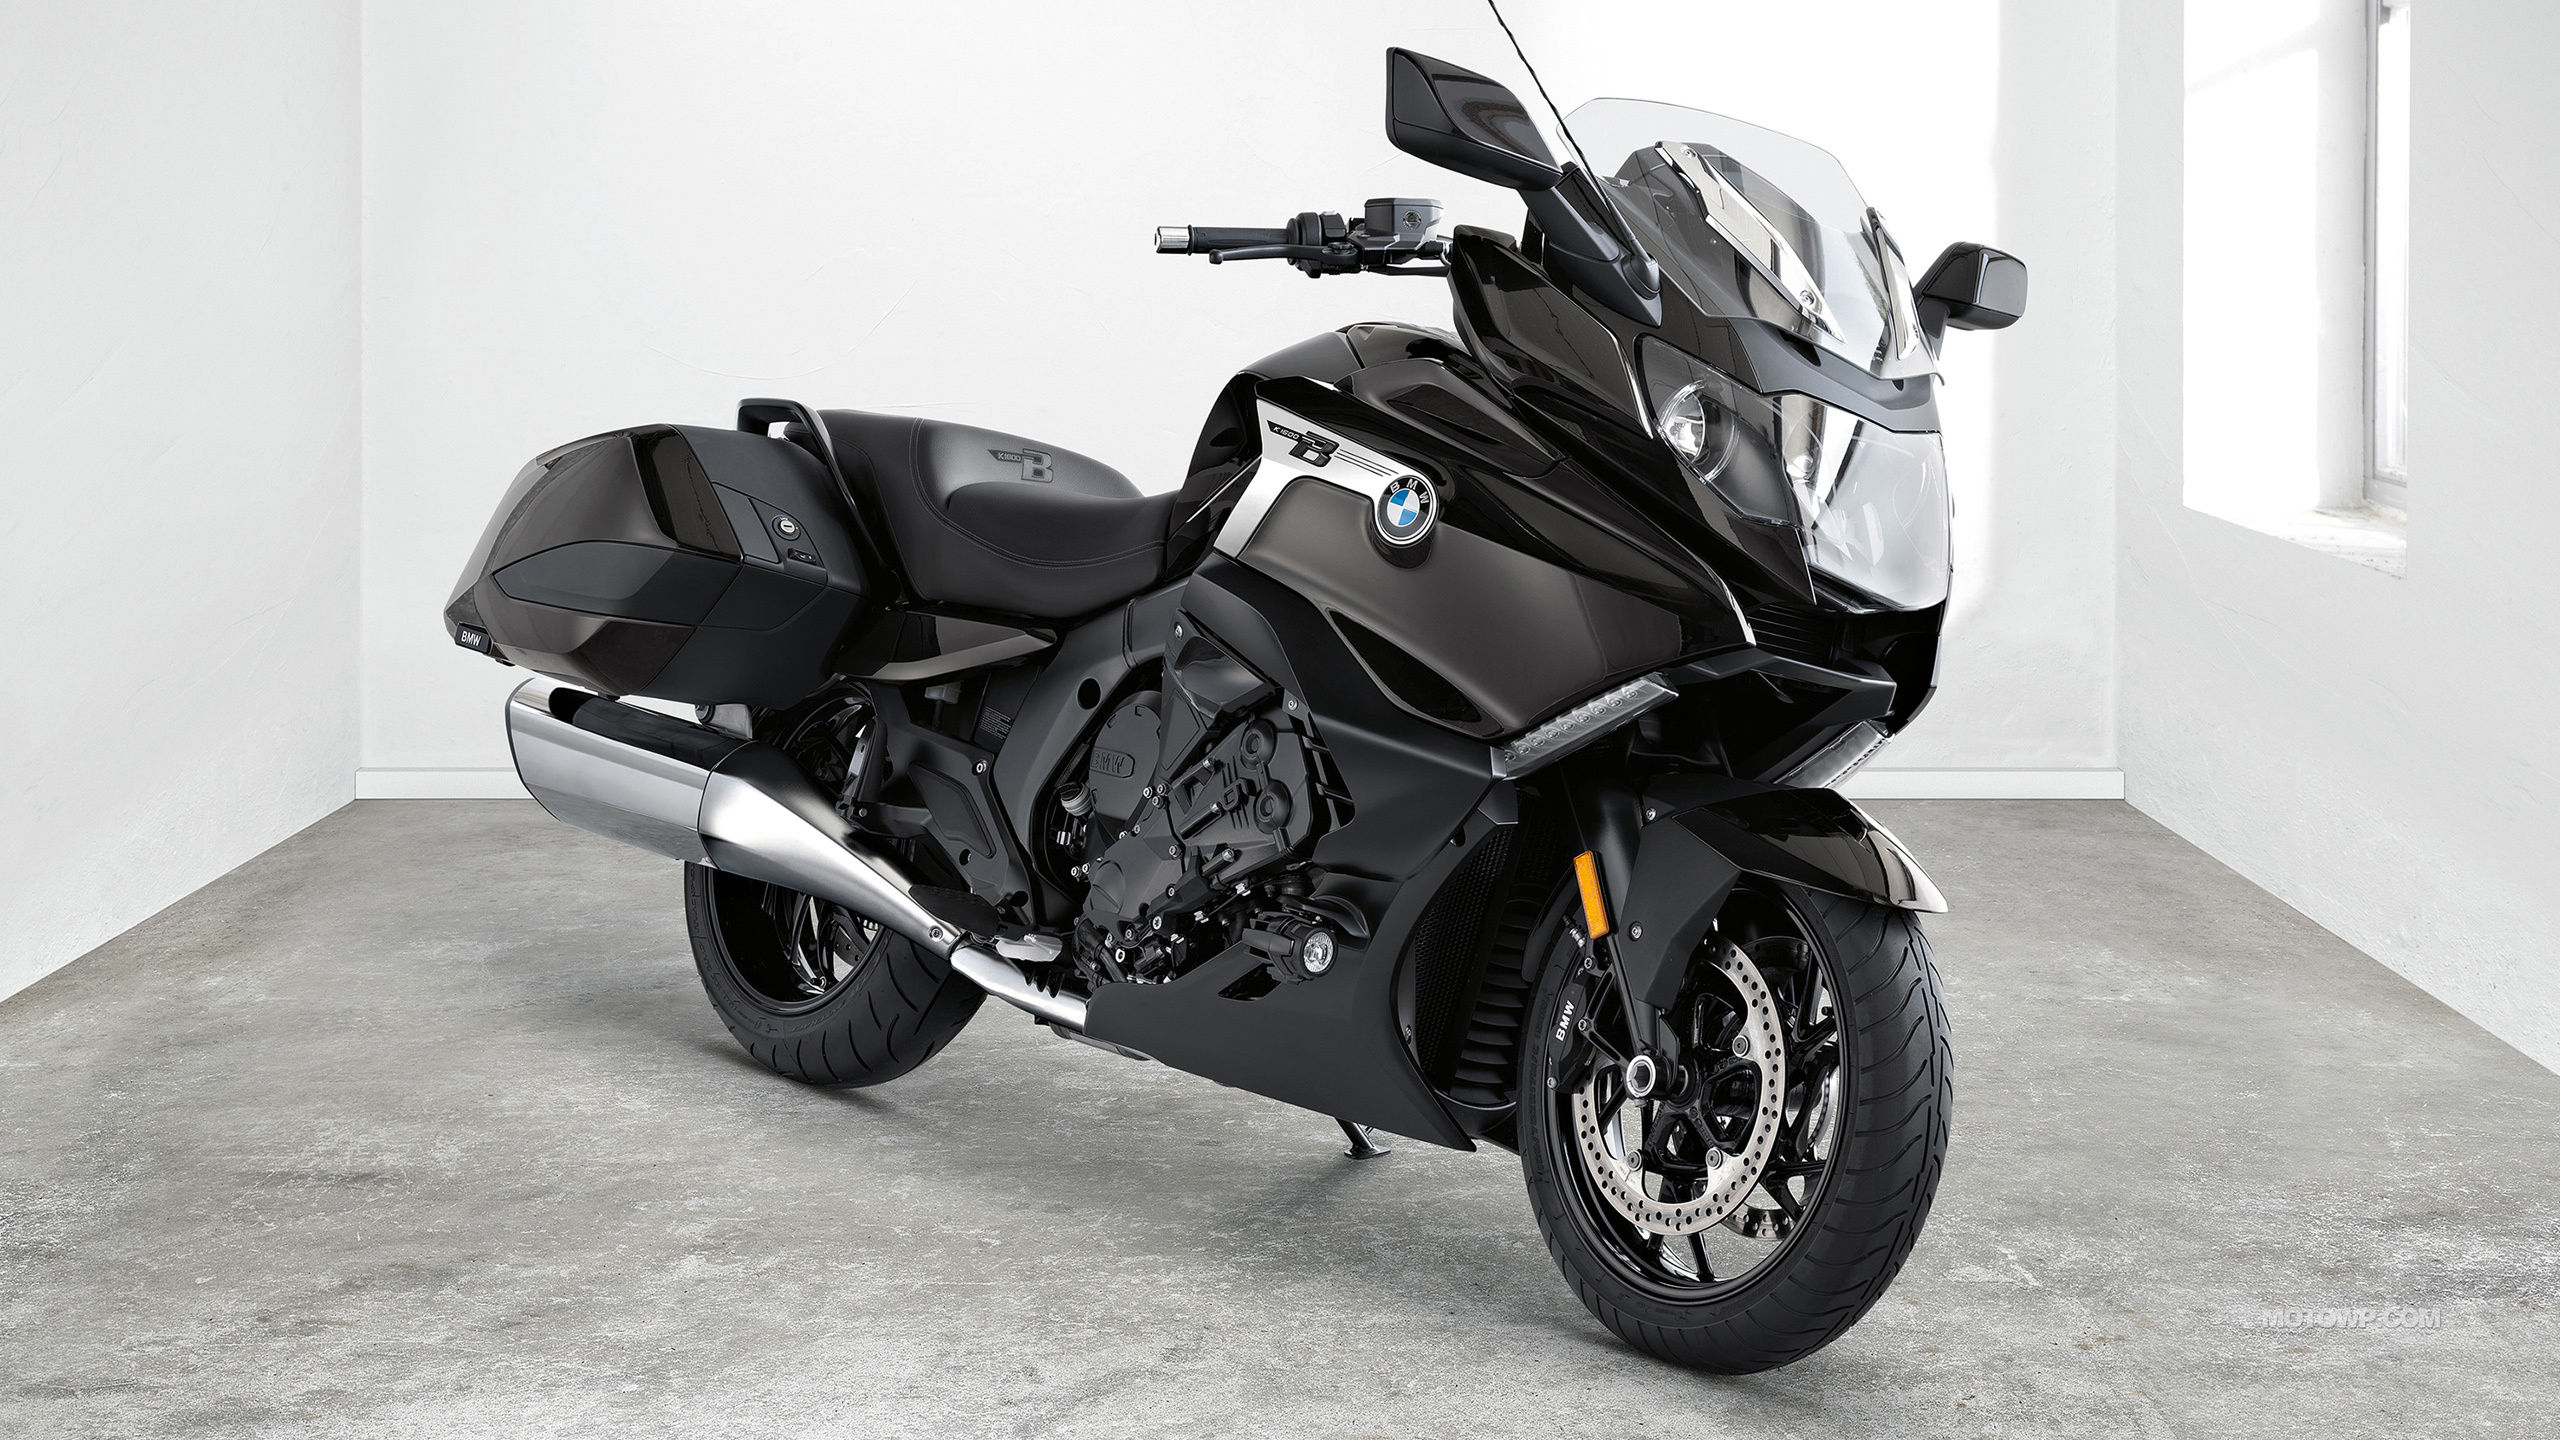 BMW K 1600 B, Motorcycle tourer, Classic design, Powerful performance, 2560x1440 HD Desktop